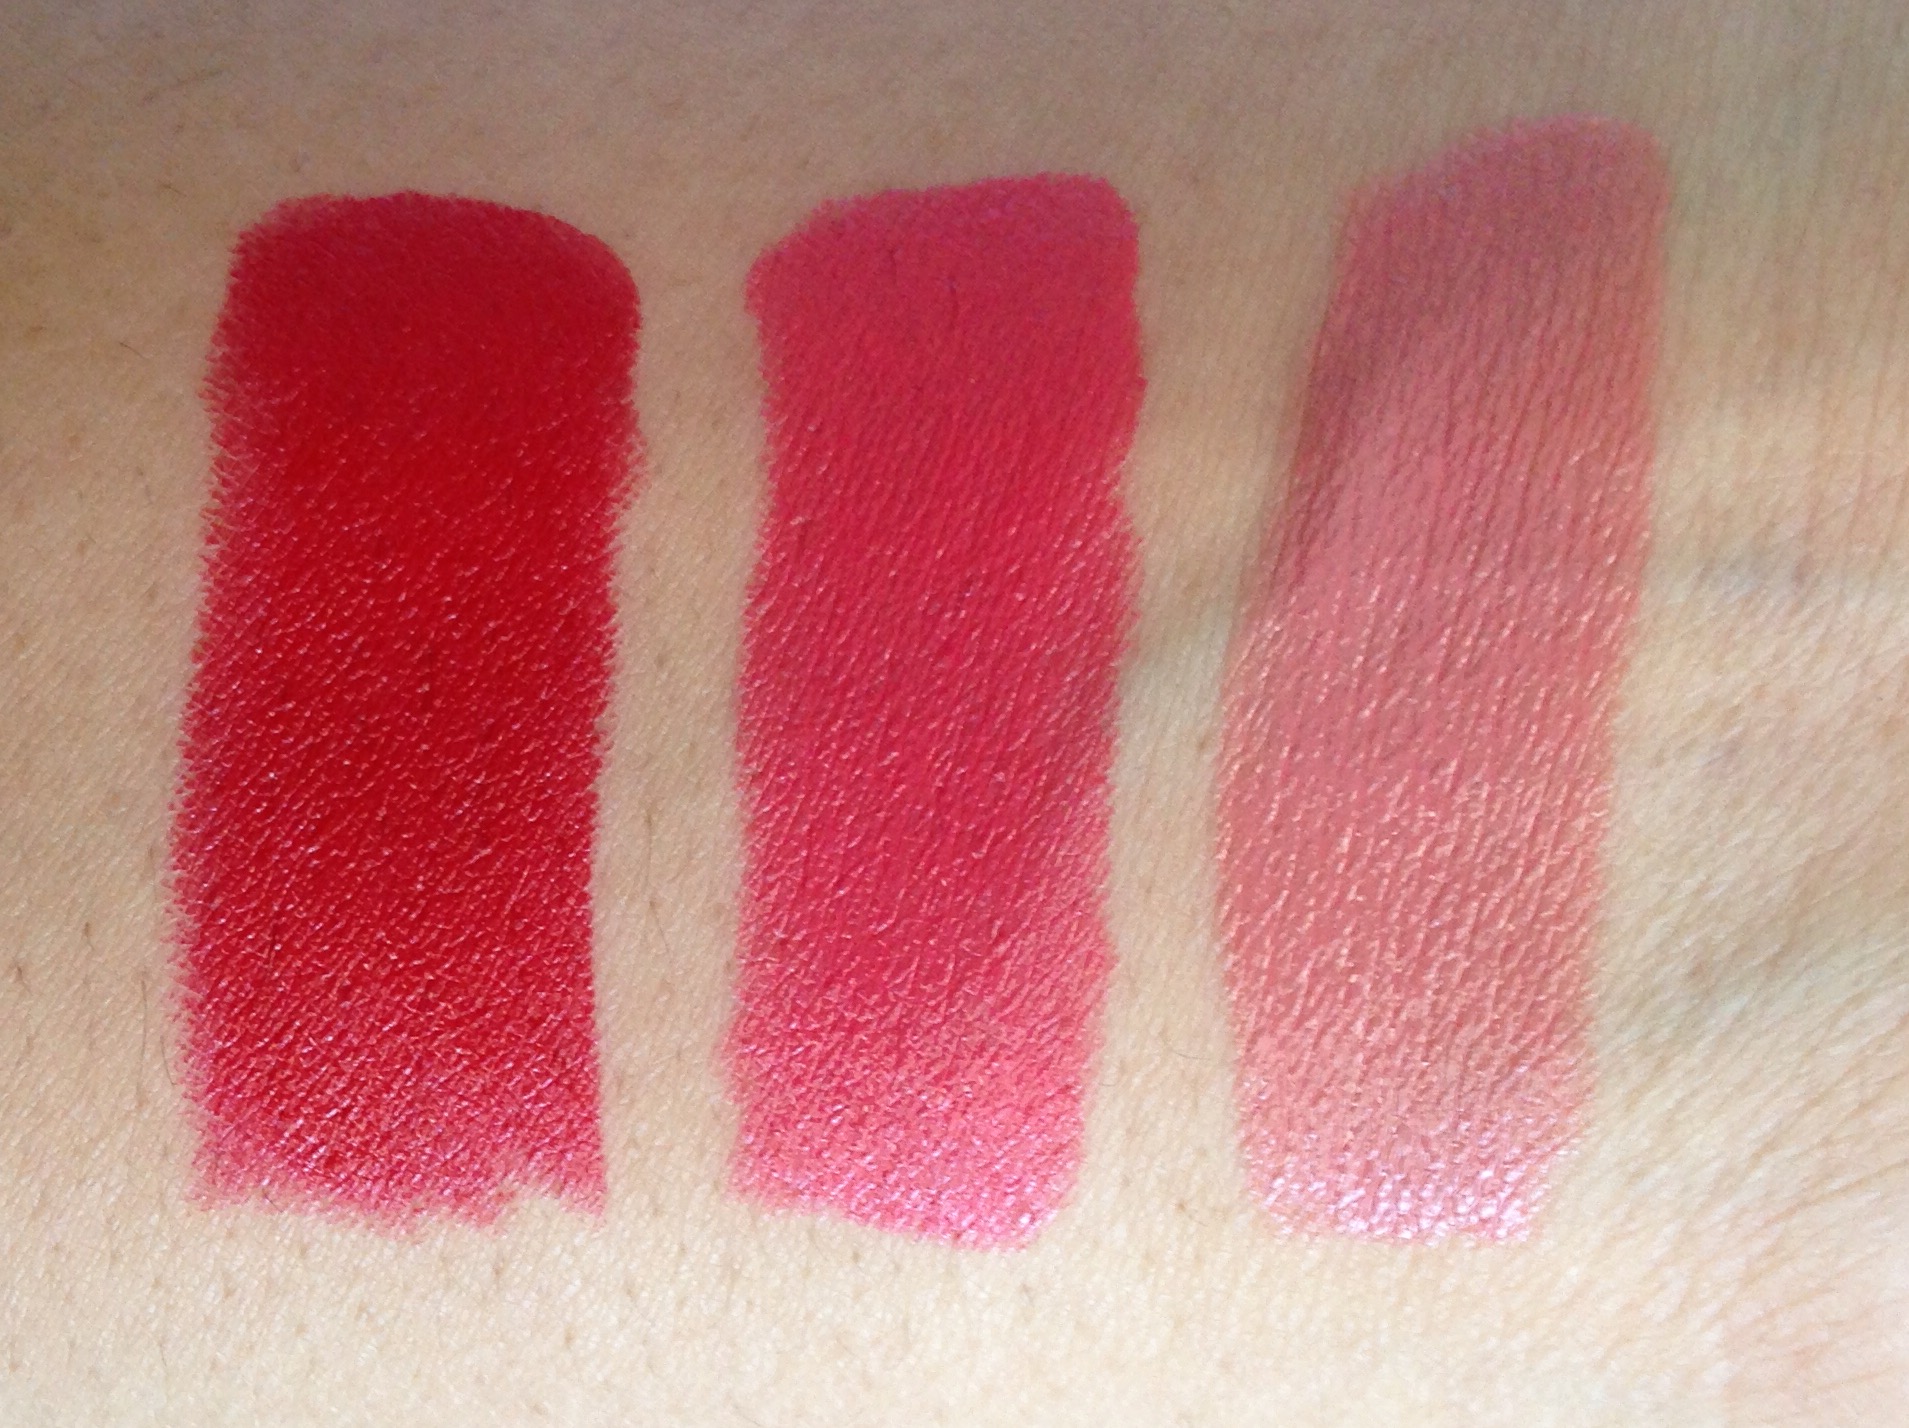 burberry crimson pink lipstick